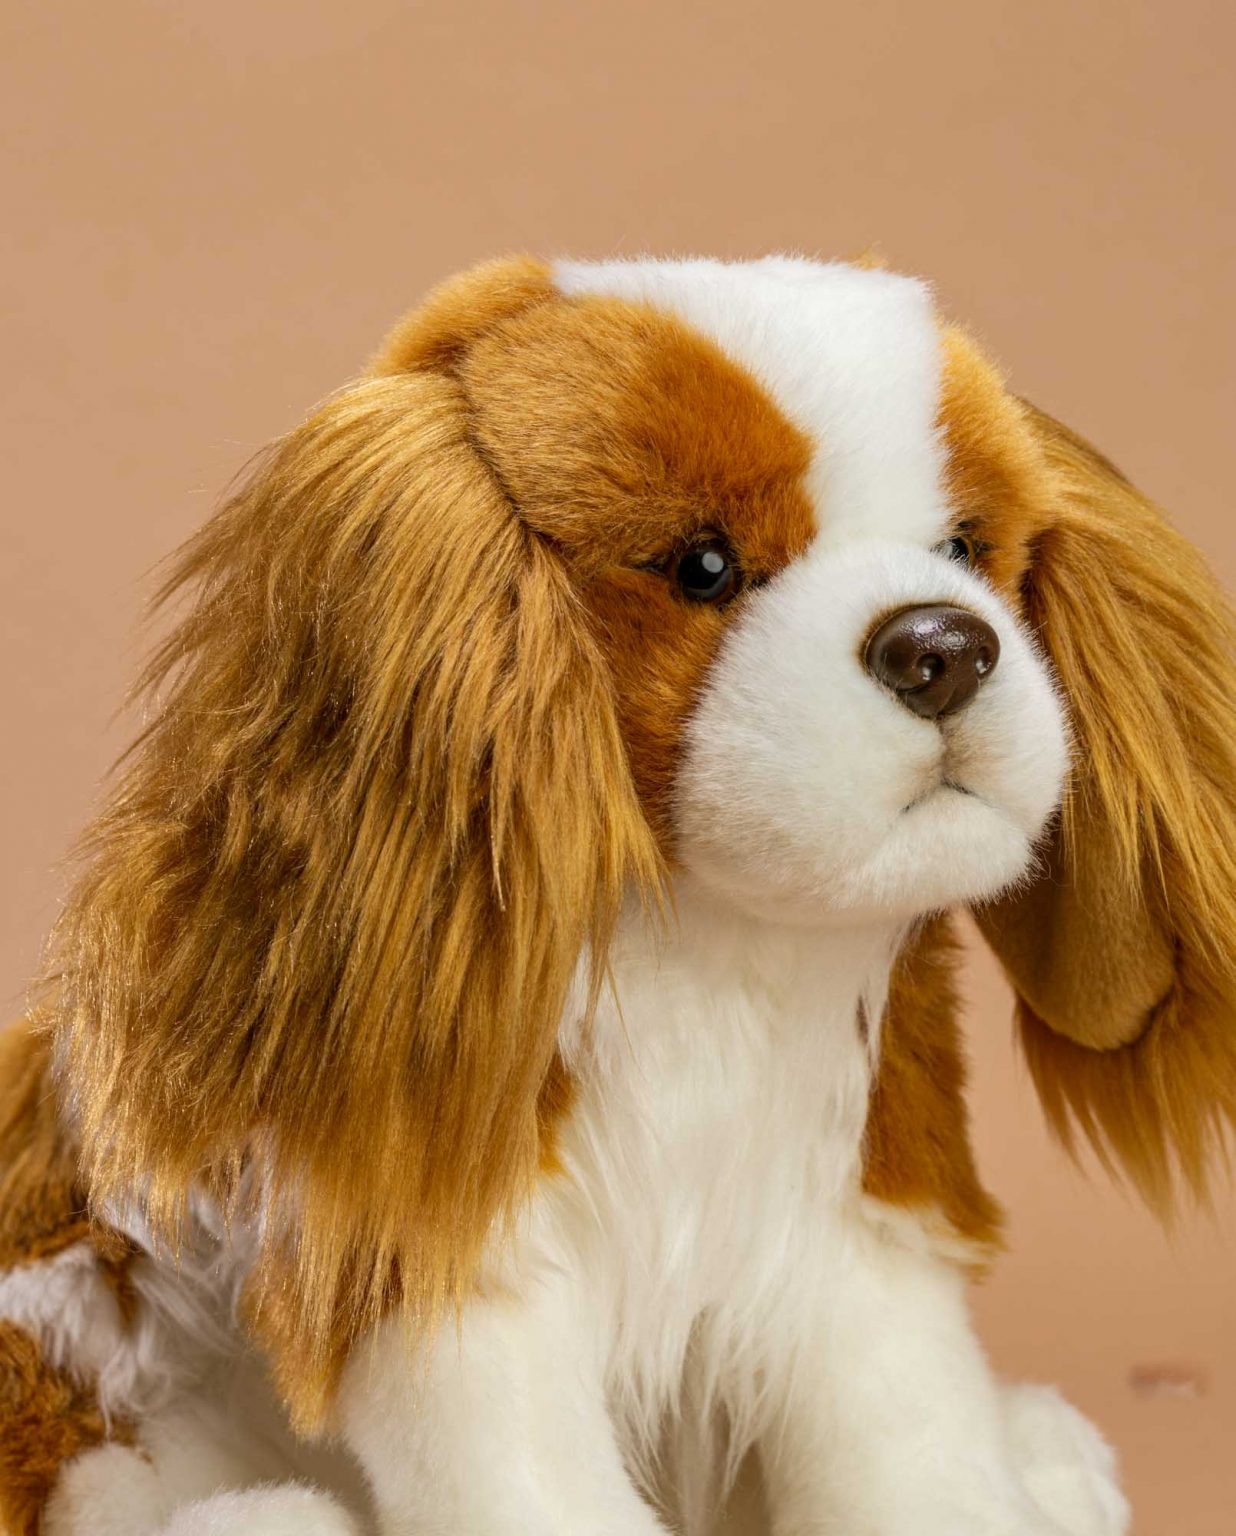 Blenheim Cavalier King Charles Spaniel Dog Soft Toy - Send a Cuddly